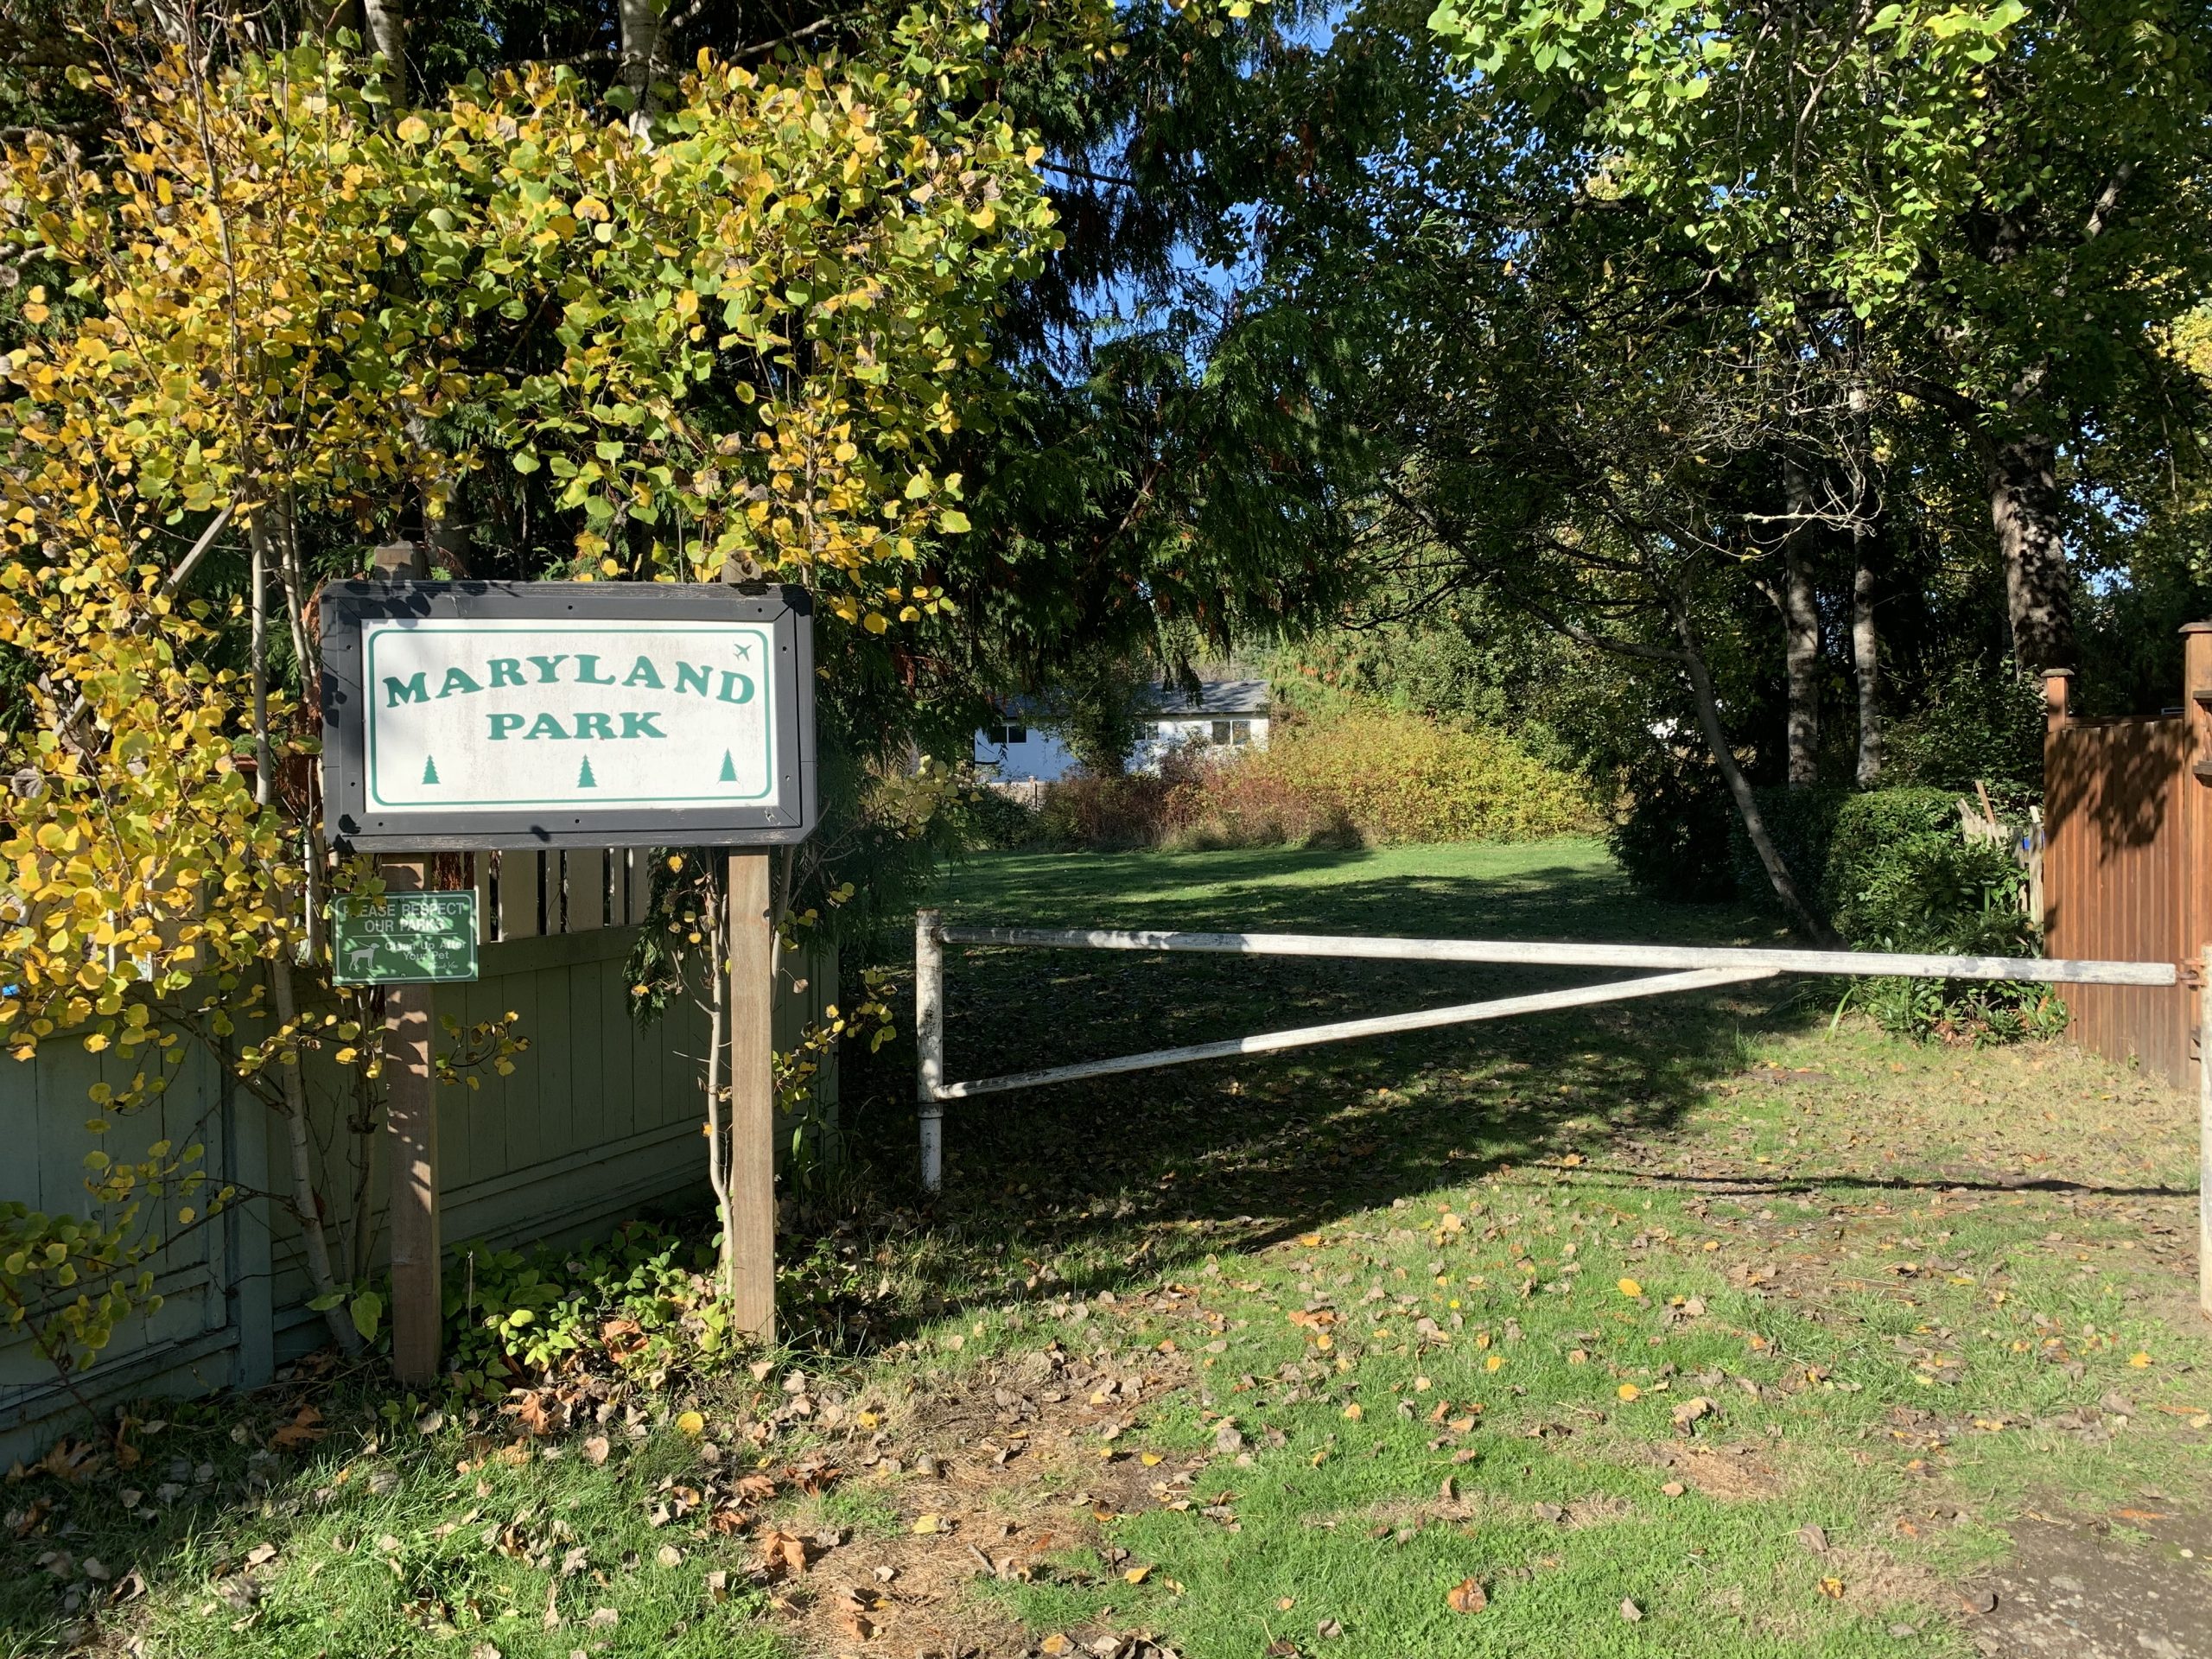  Maryland Park Sign 